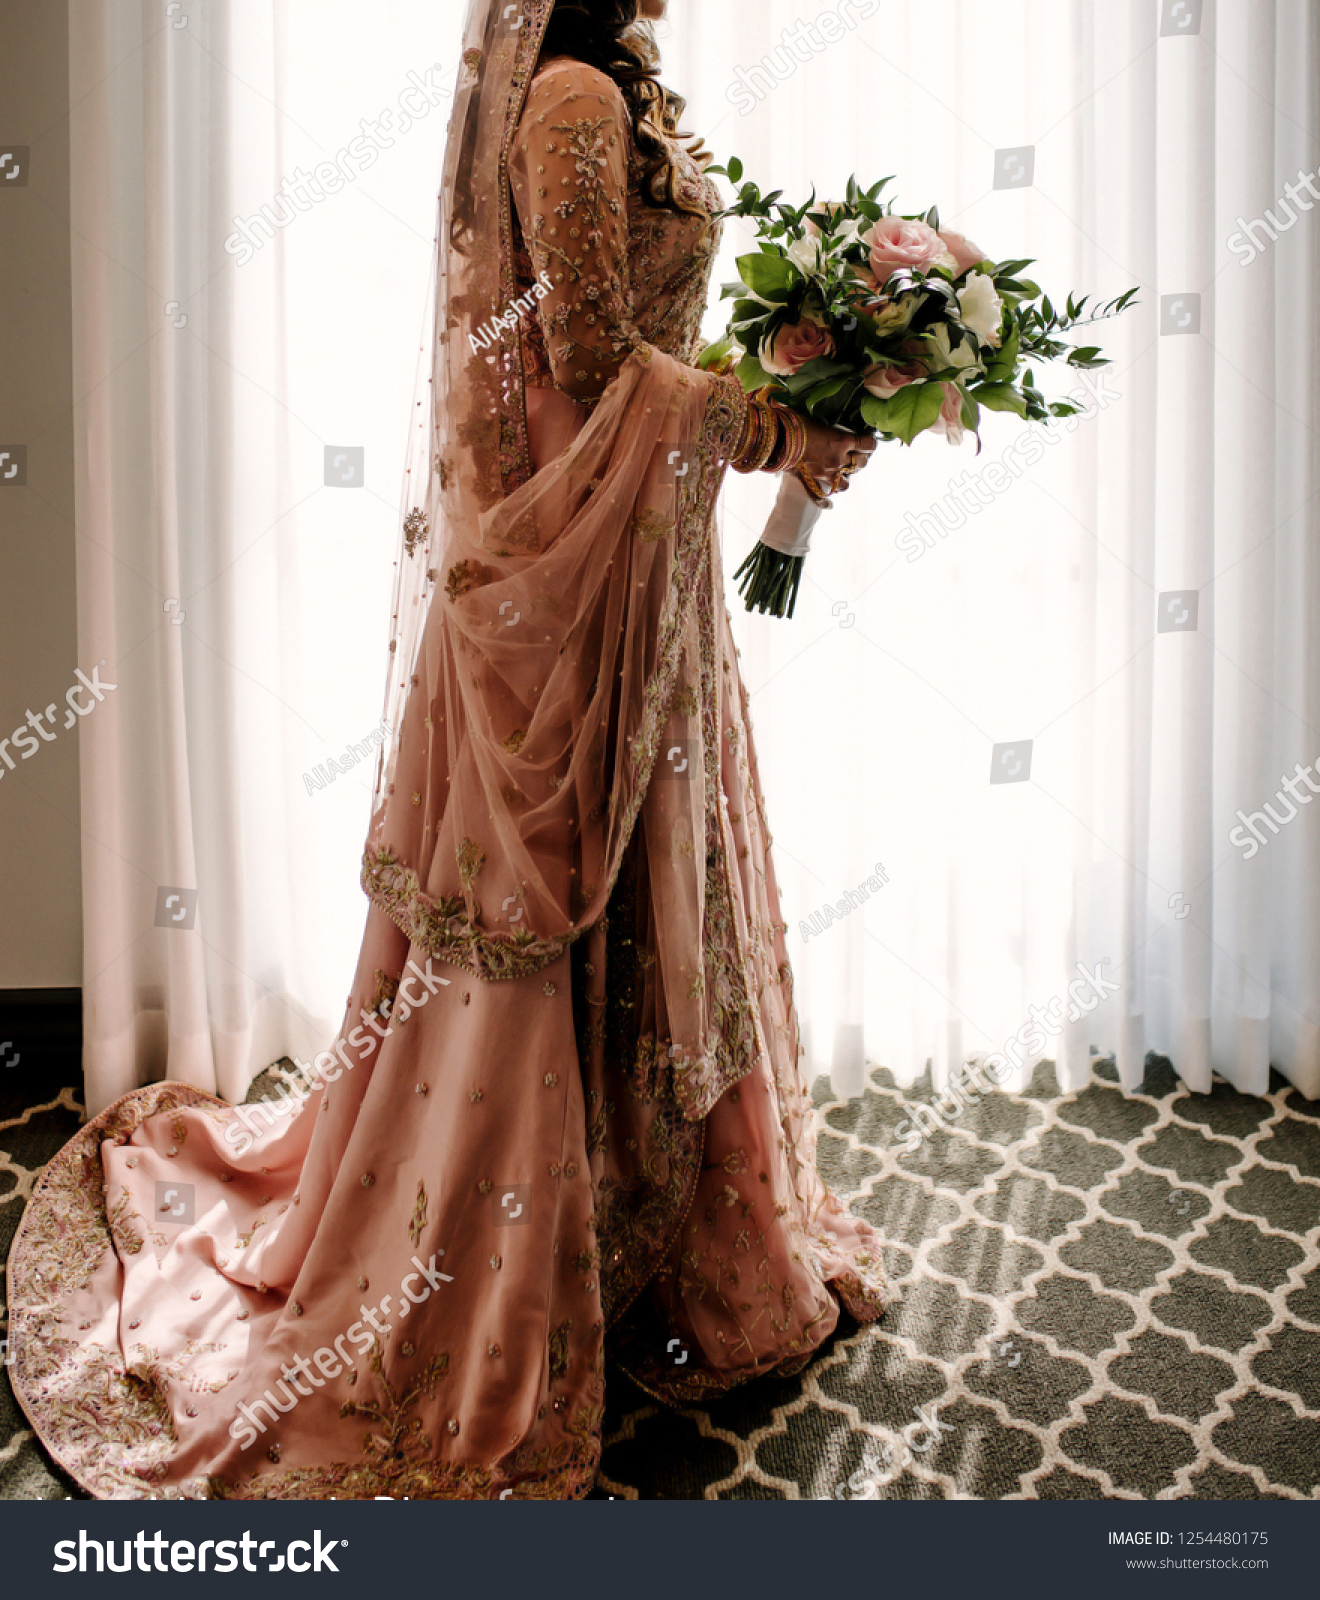 Pakistani Indian bride holding the bouquet and wearing wedding Lehnga skirts dress #1254480175